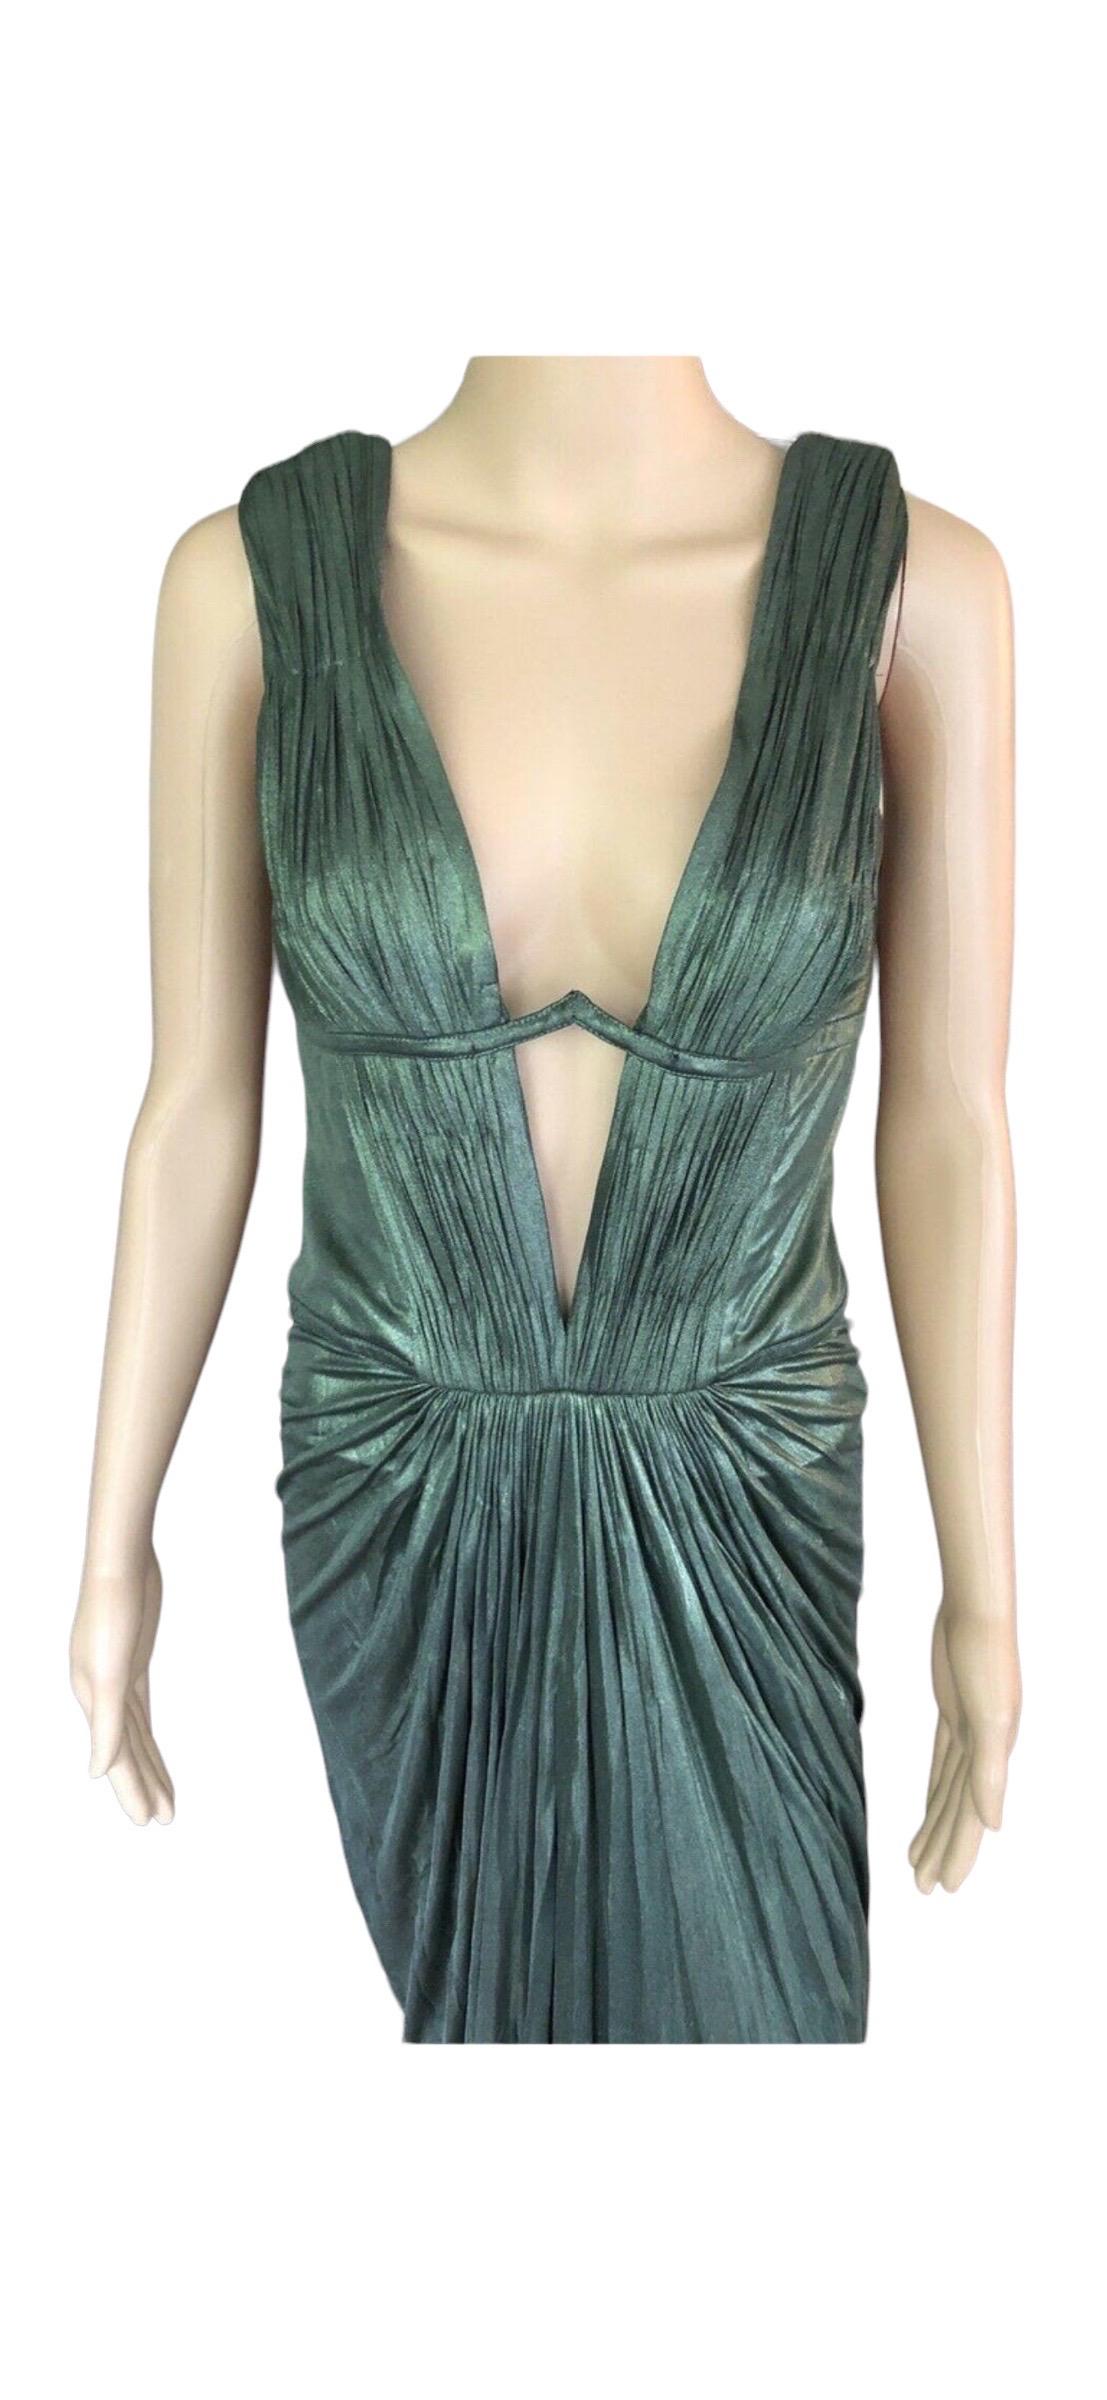 Roberto Cavalli F/W 2007 Runway Metallic Plunging Neckline Open Back Dress Gown In Good Condition For Sale In Naples, FL